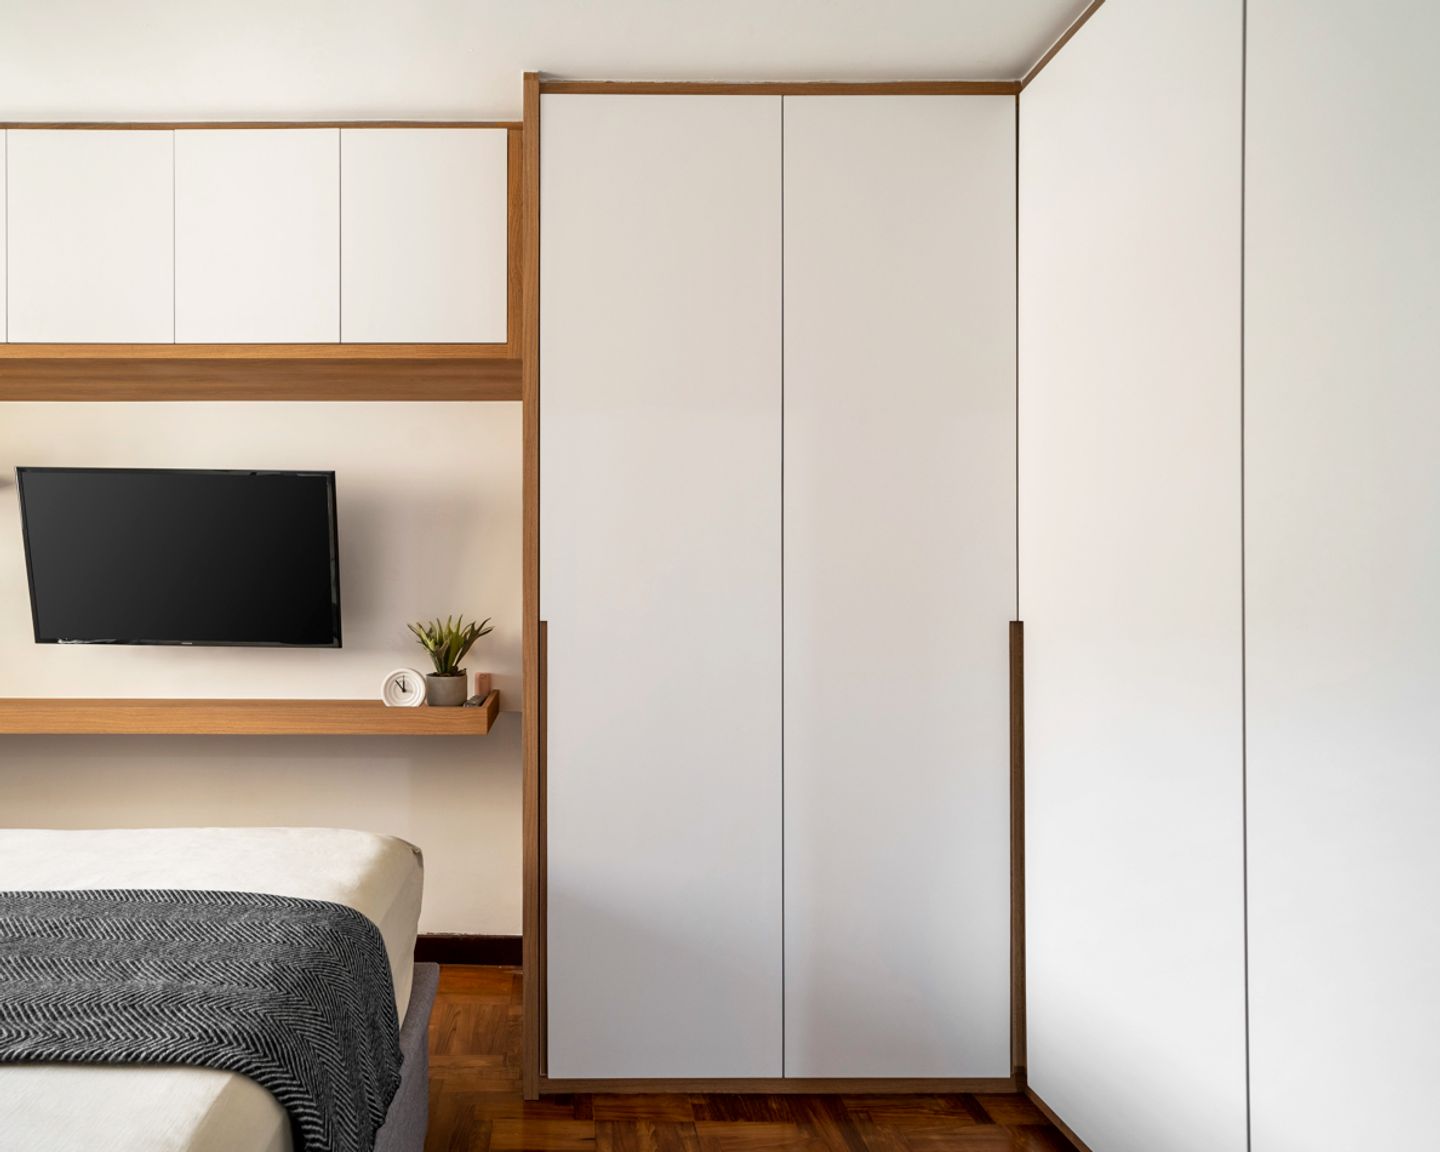 All-White Bedroom Design With Maximum Storage - Livspace